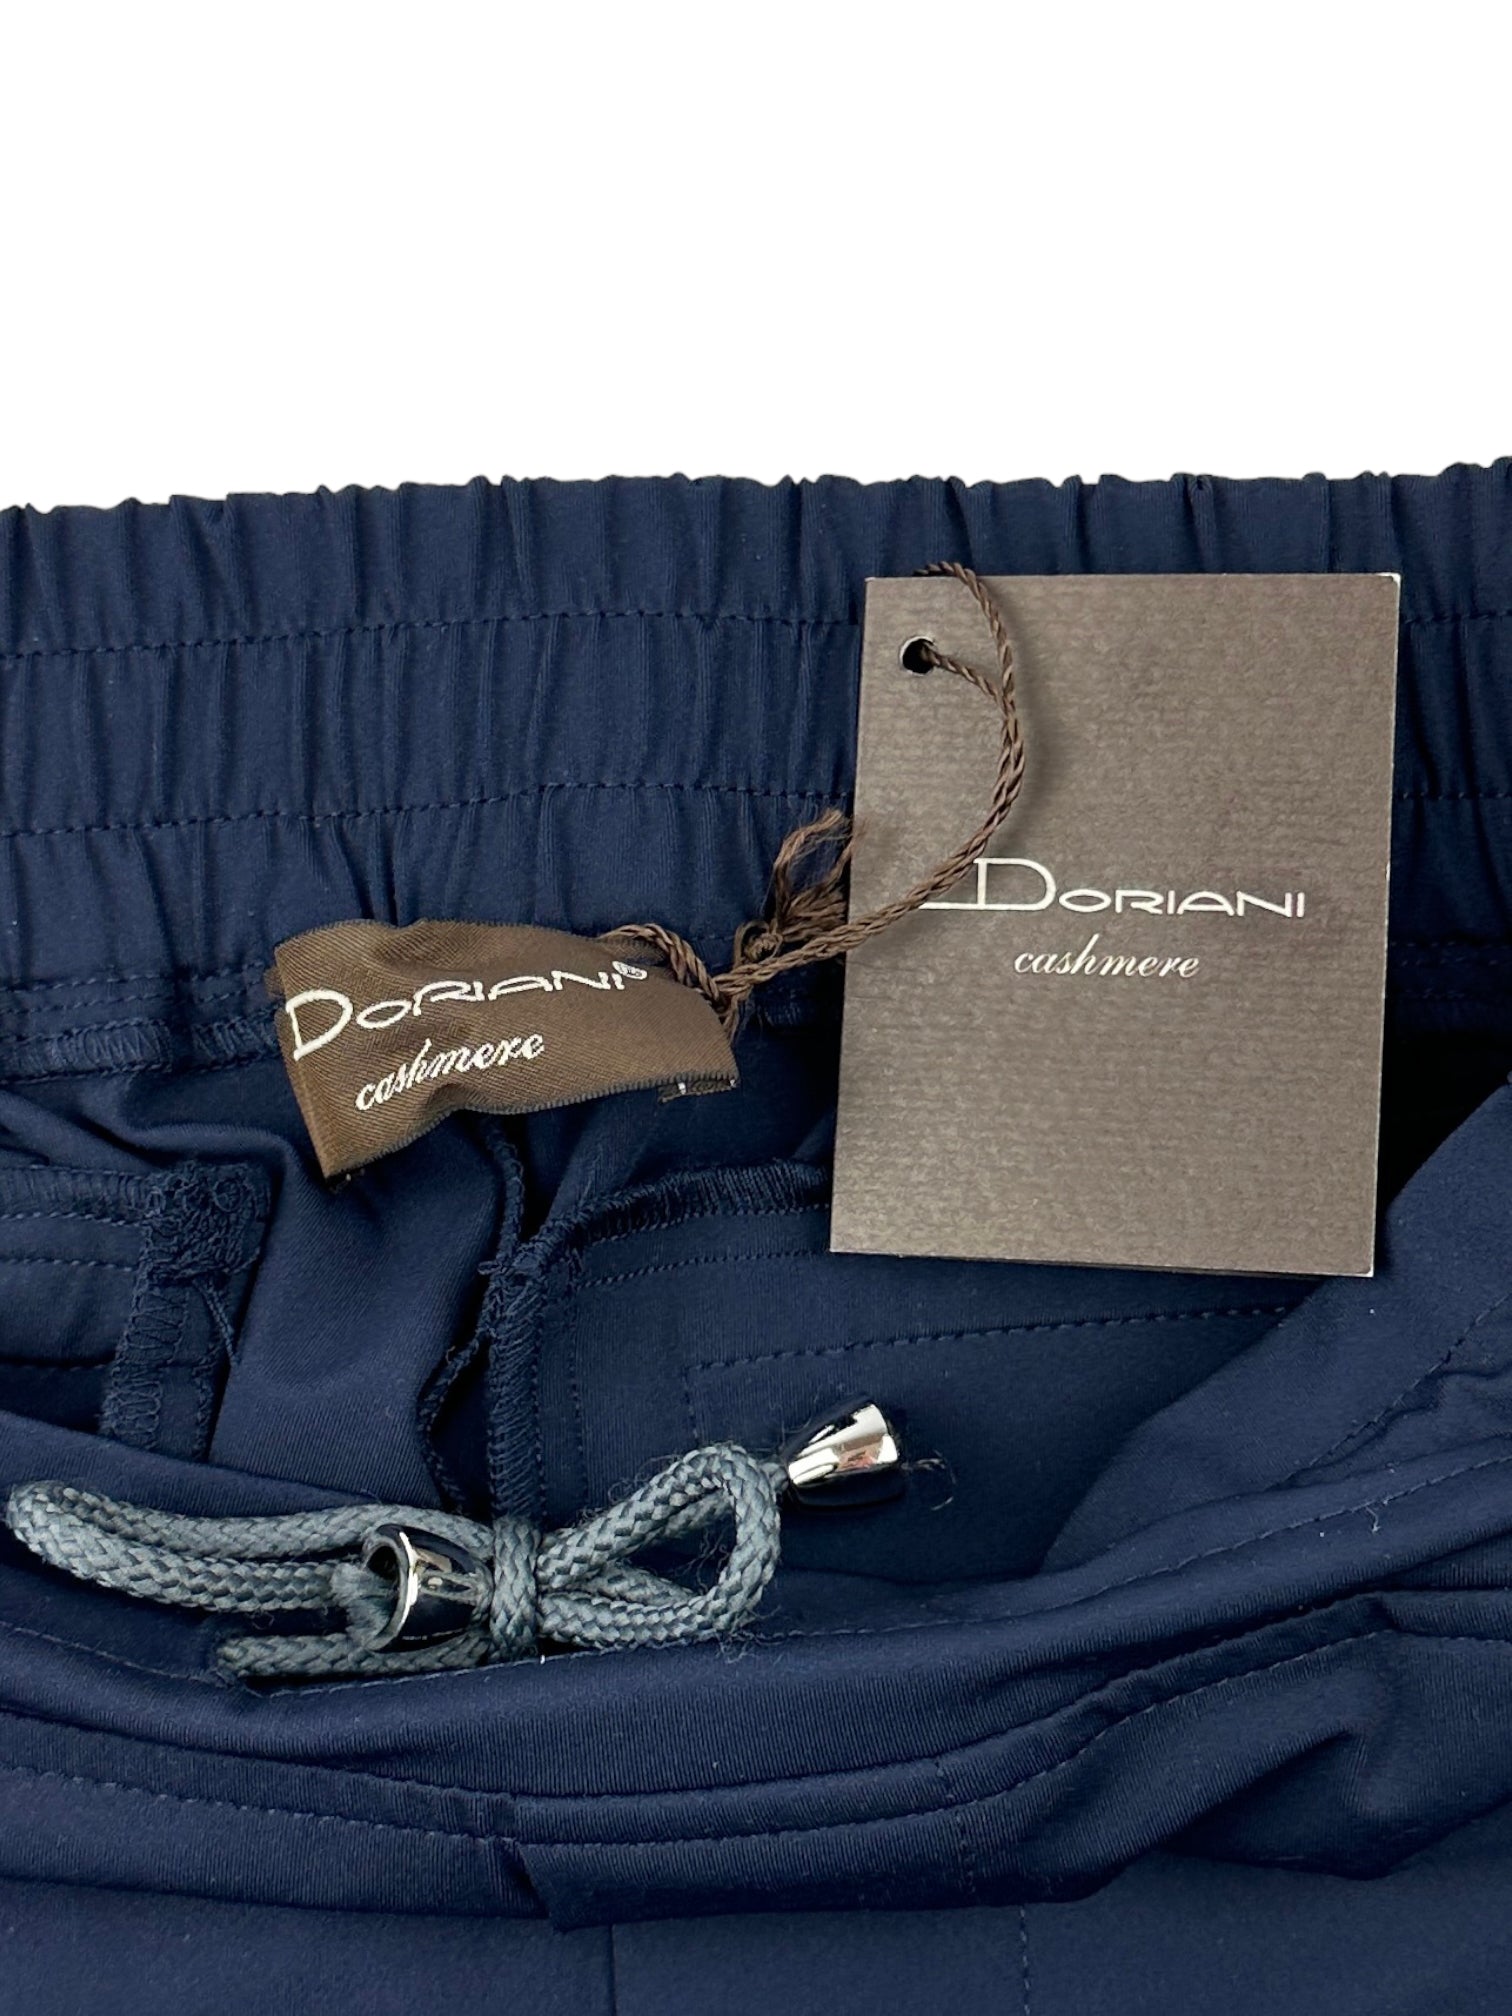 Doriani Cashmere Navy Stretch Trousers